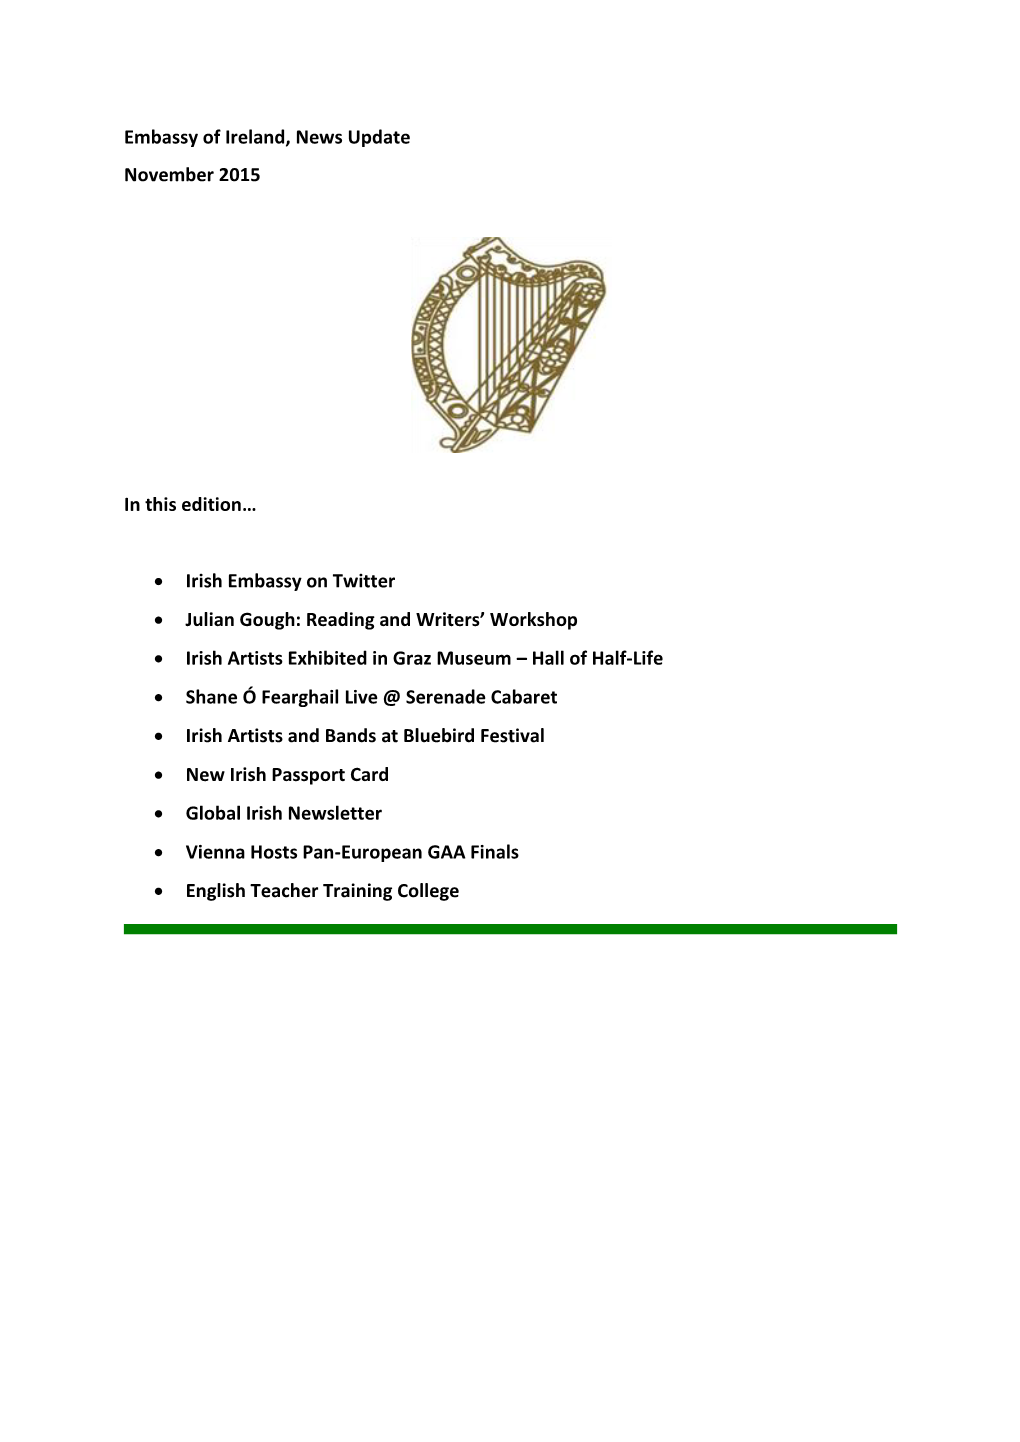 Irish Embassy on Twitter • Julian Gough